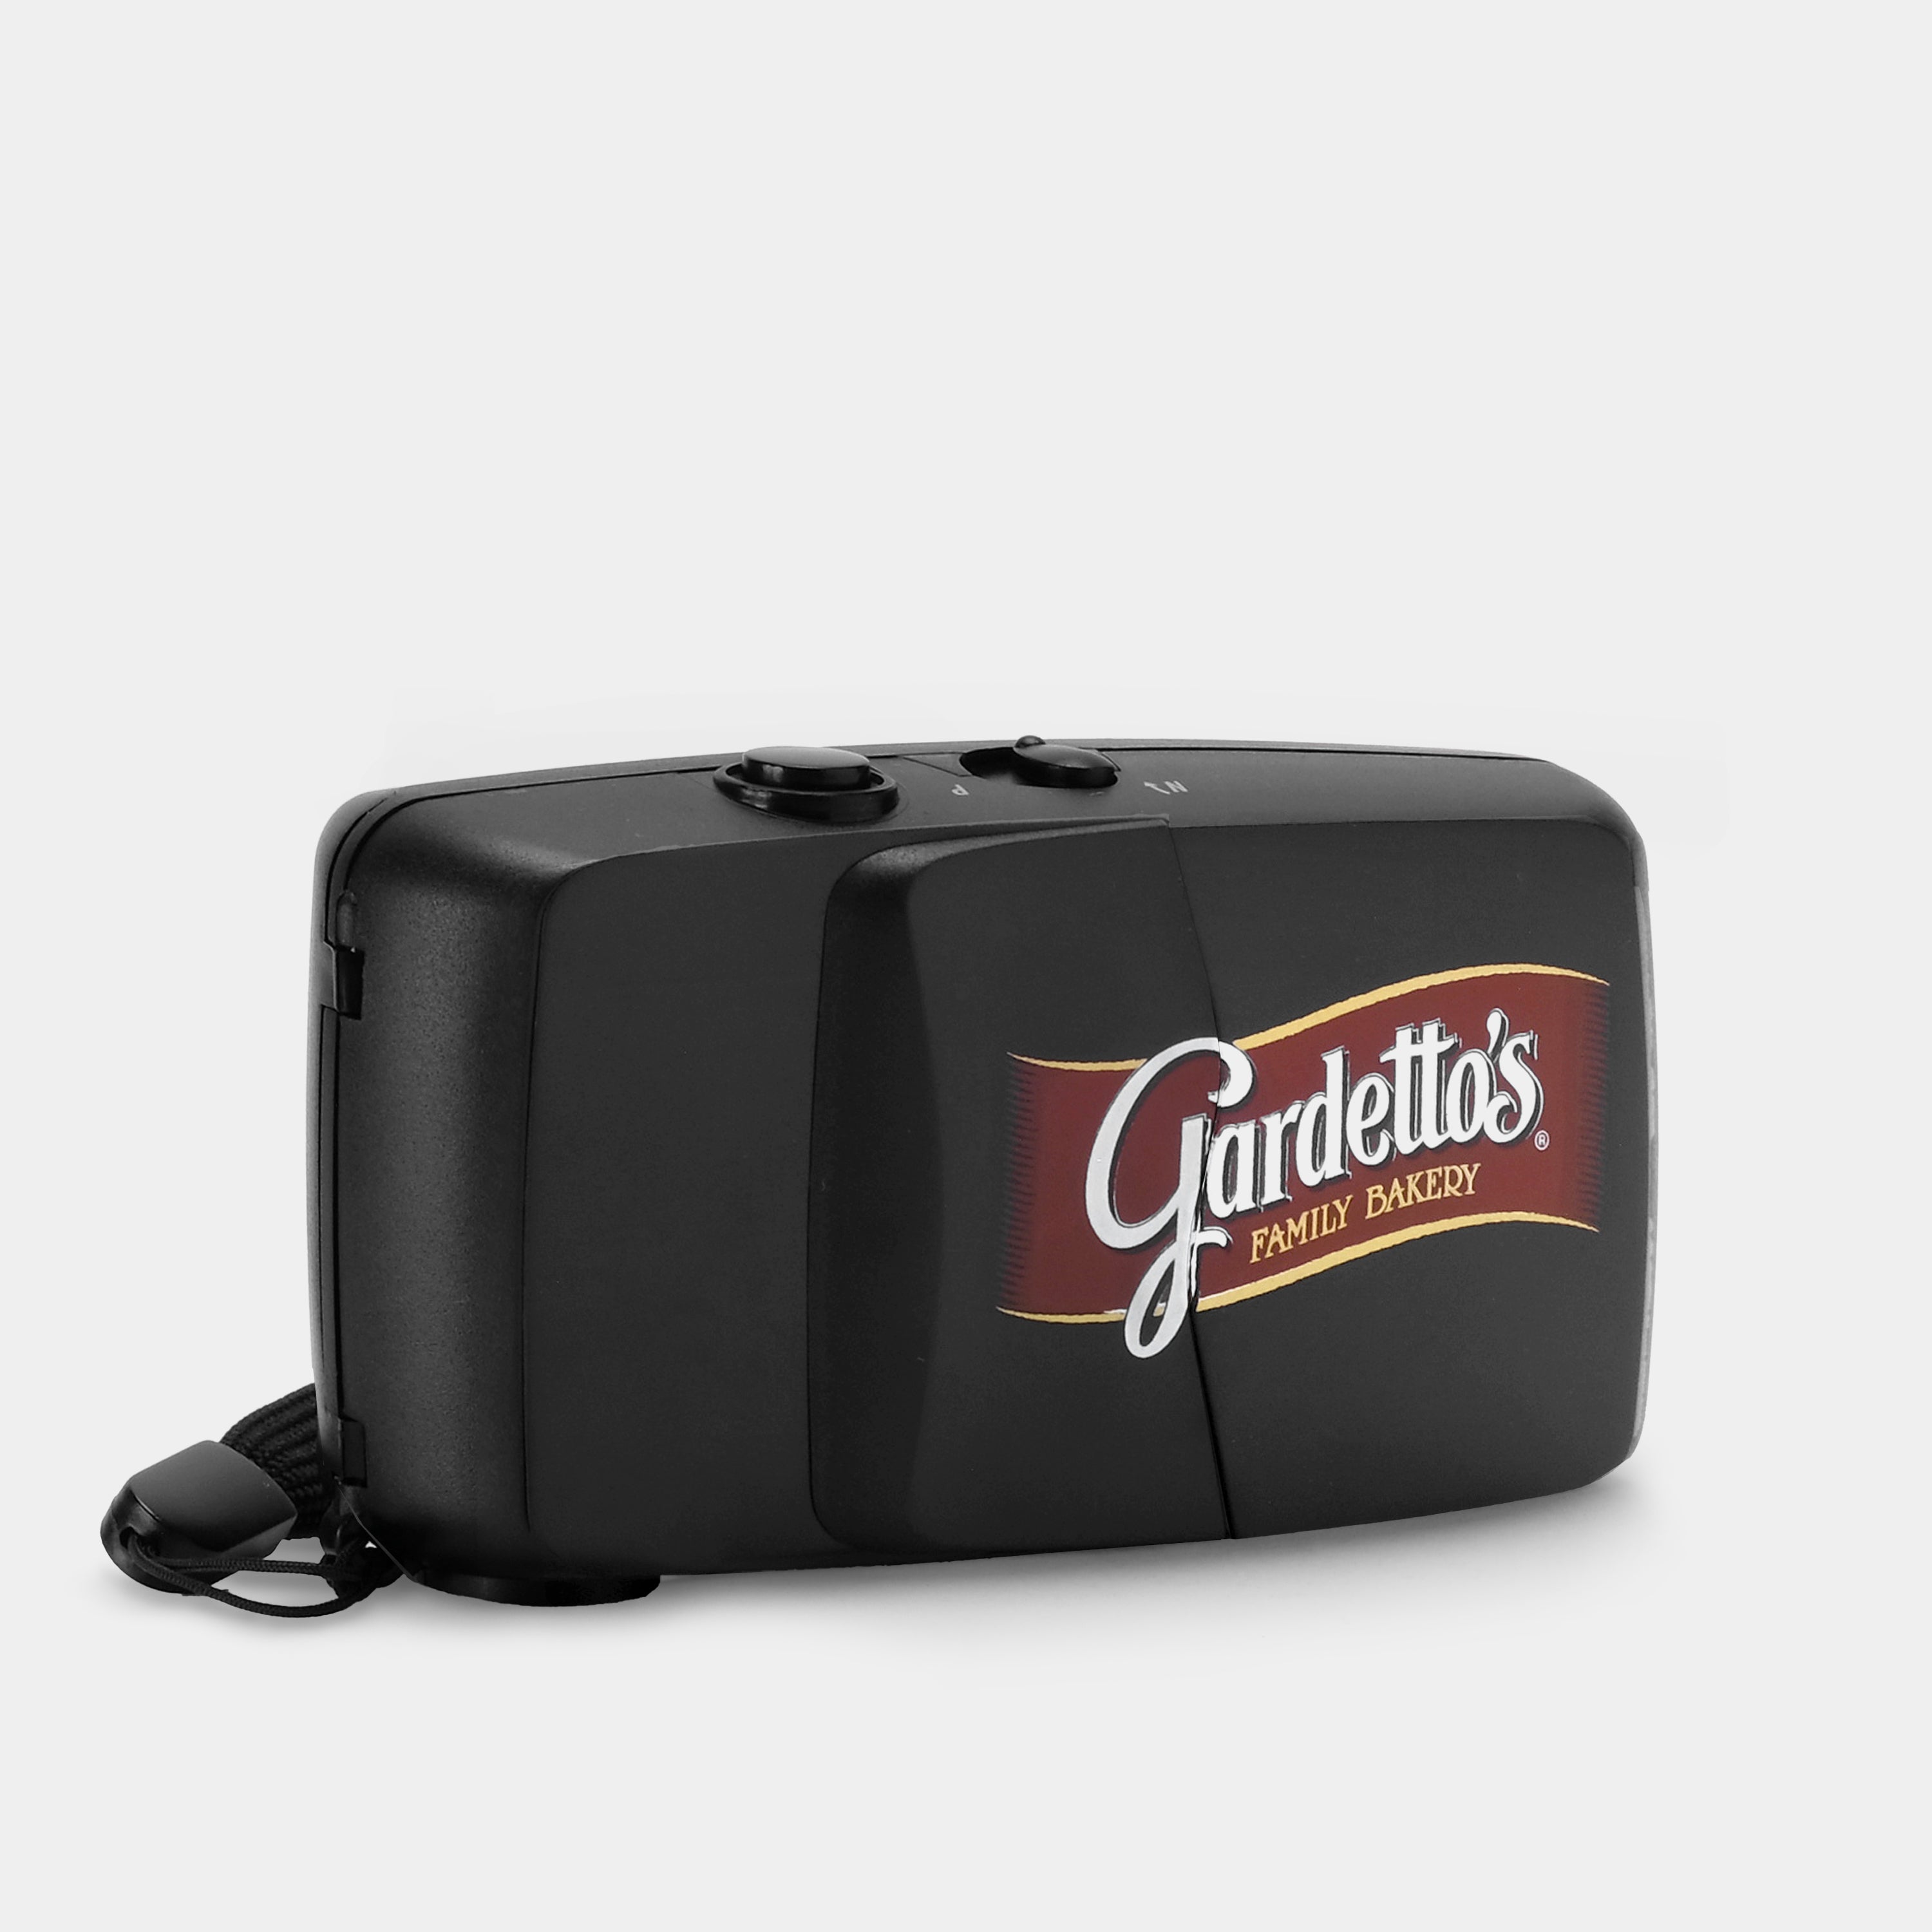 Gardetto's Family Bakery 35mm Point and Shoot Film Camera